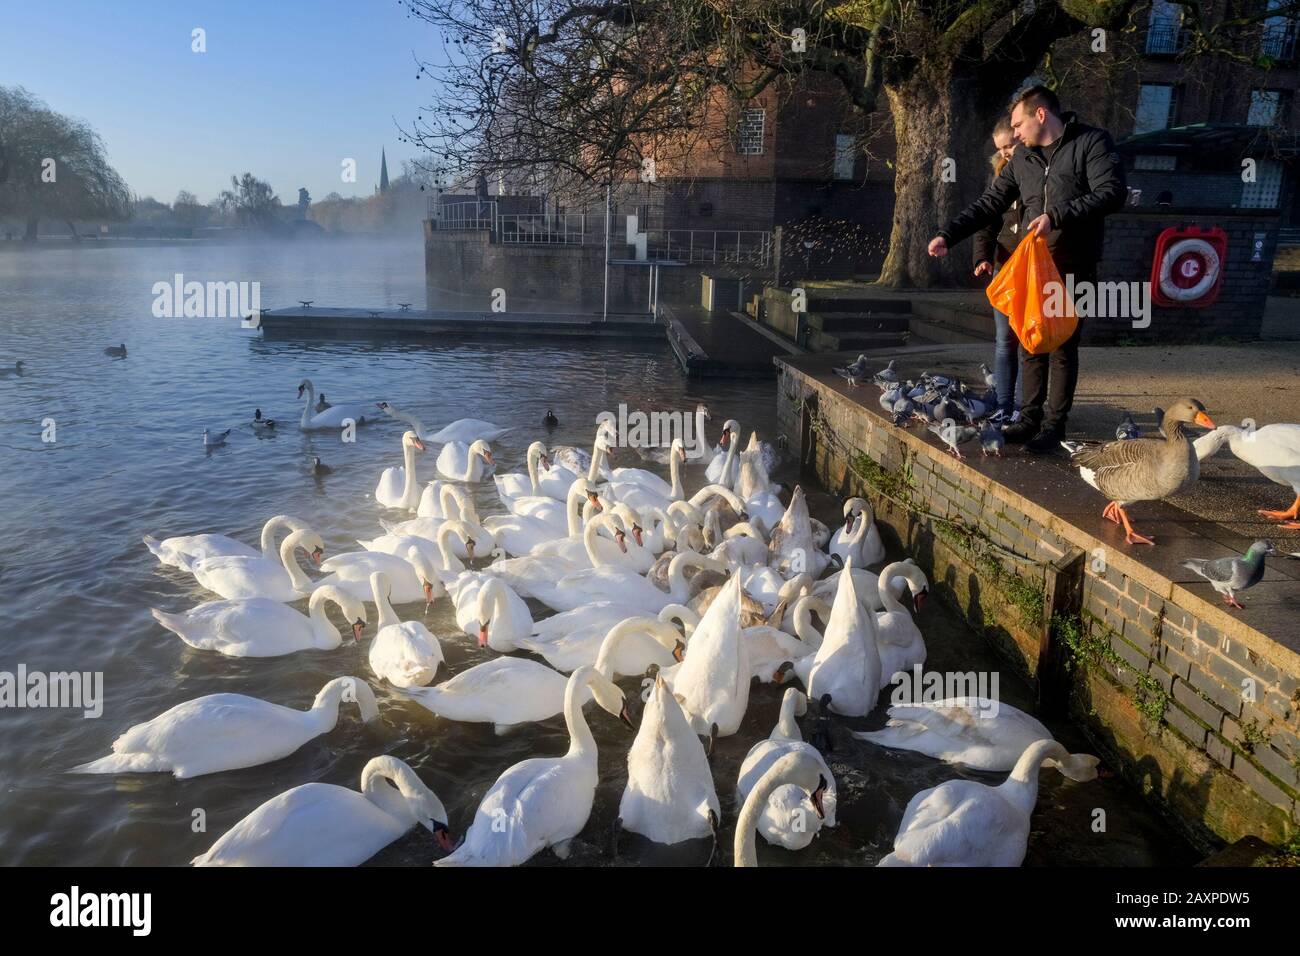 Couple feeding swans, Stratford upon Avon, Warwickshire, England, UK Stock Photo